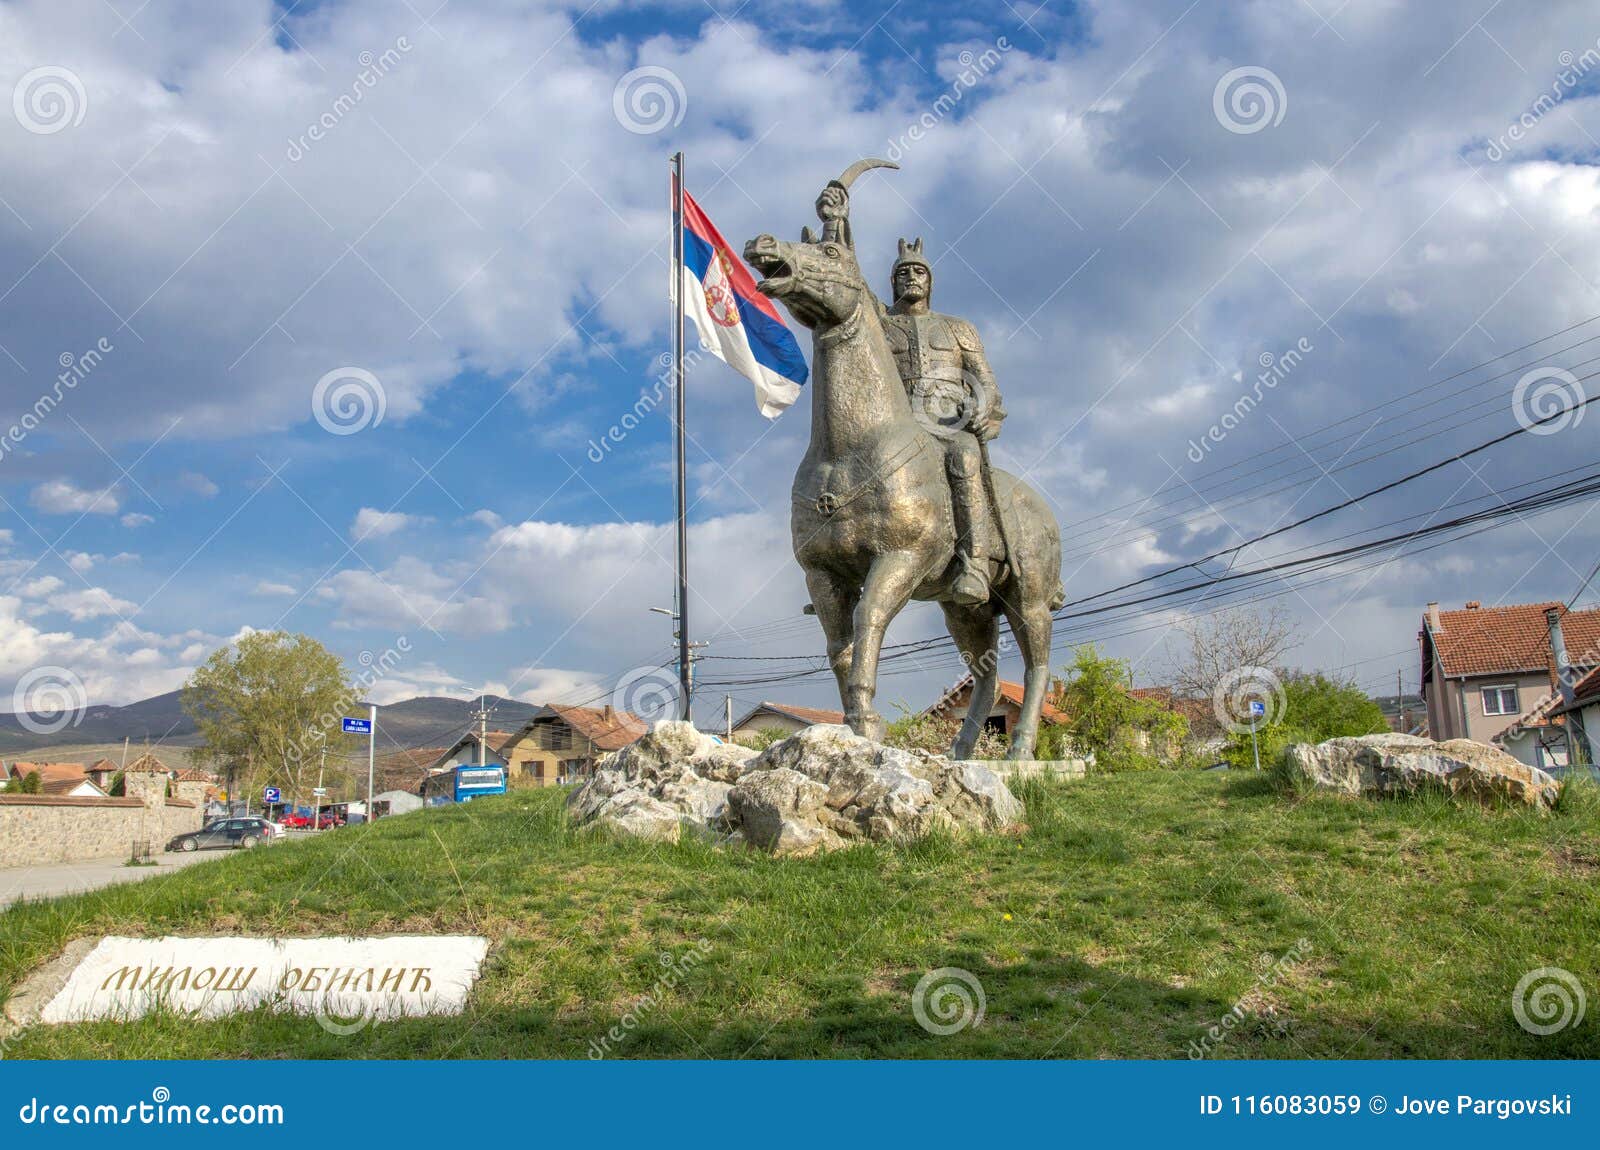 gracanica kosovo Ã¢â¬â milos obilic monument